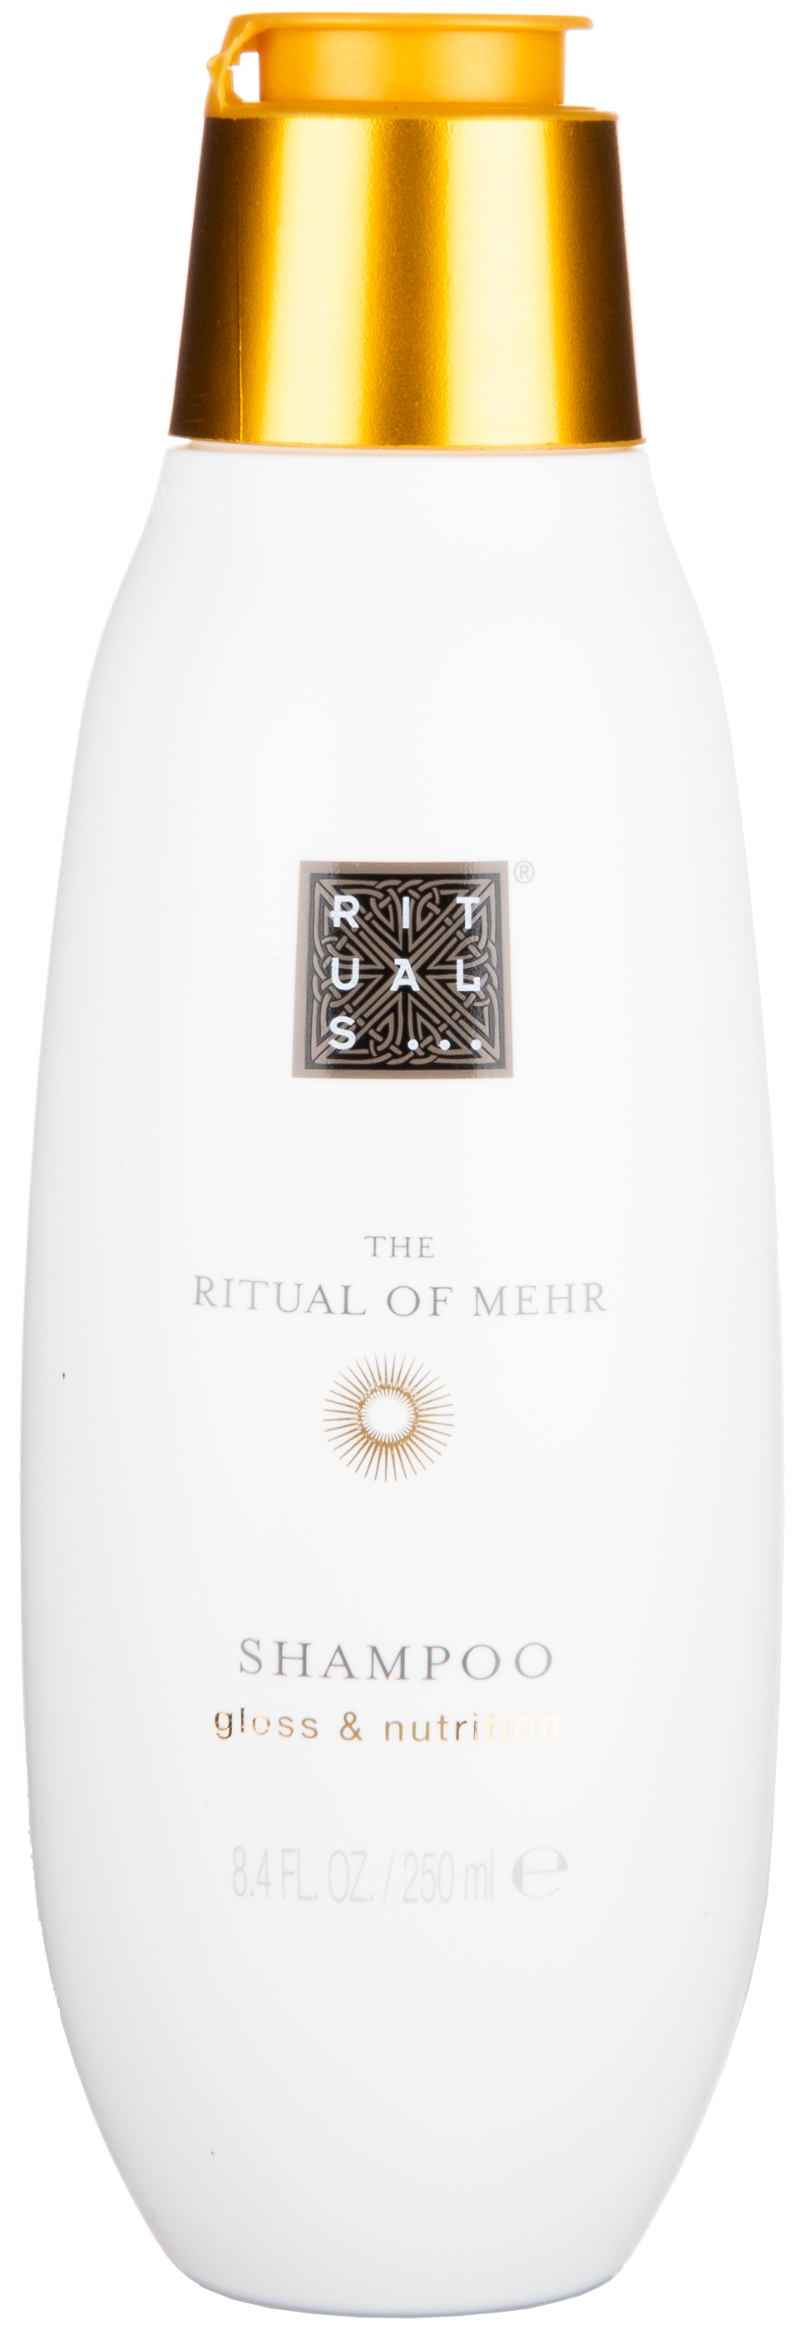 The Ritual of Mehr - Shampoo Refill 1L – Swisstrade